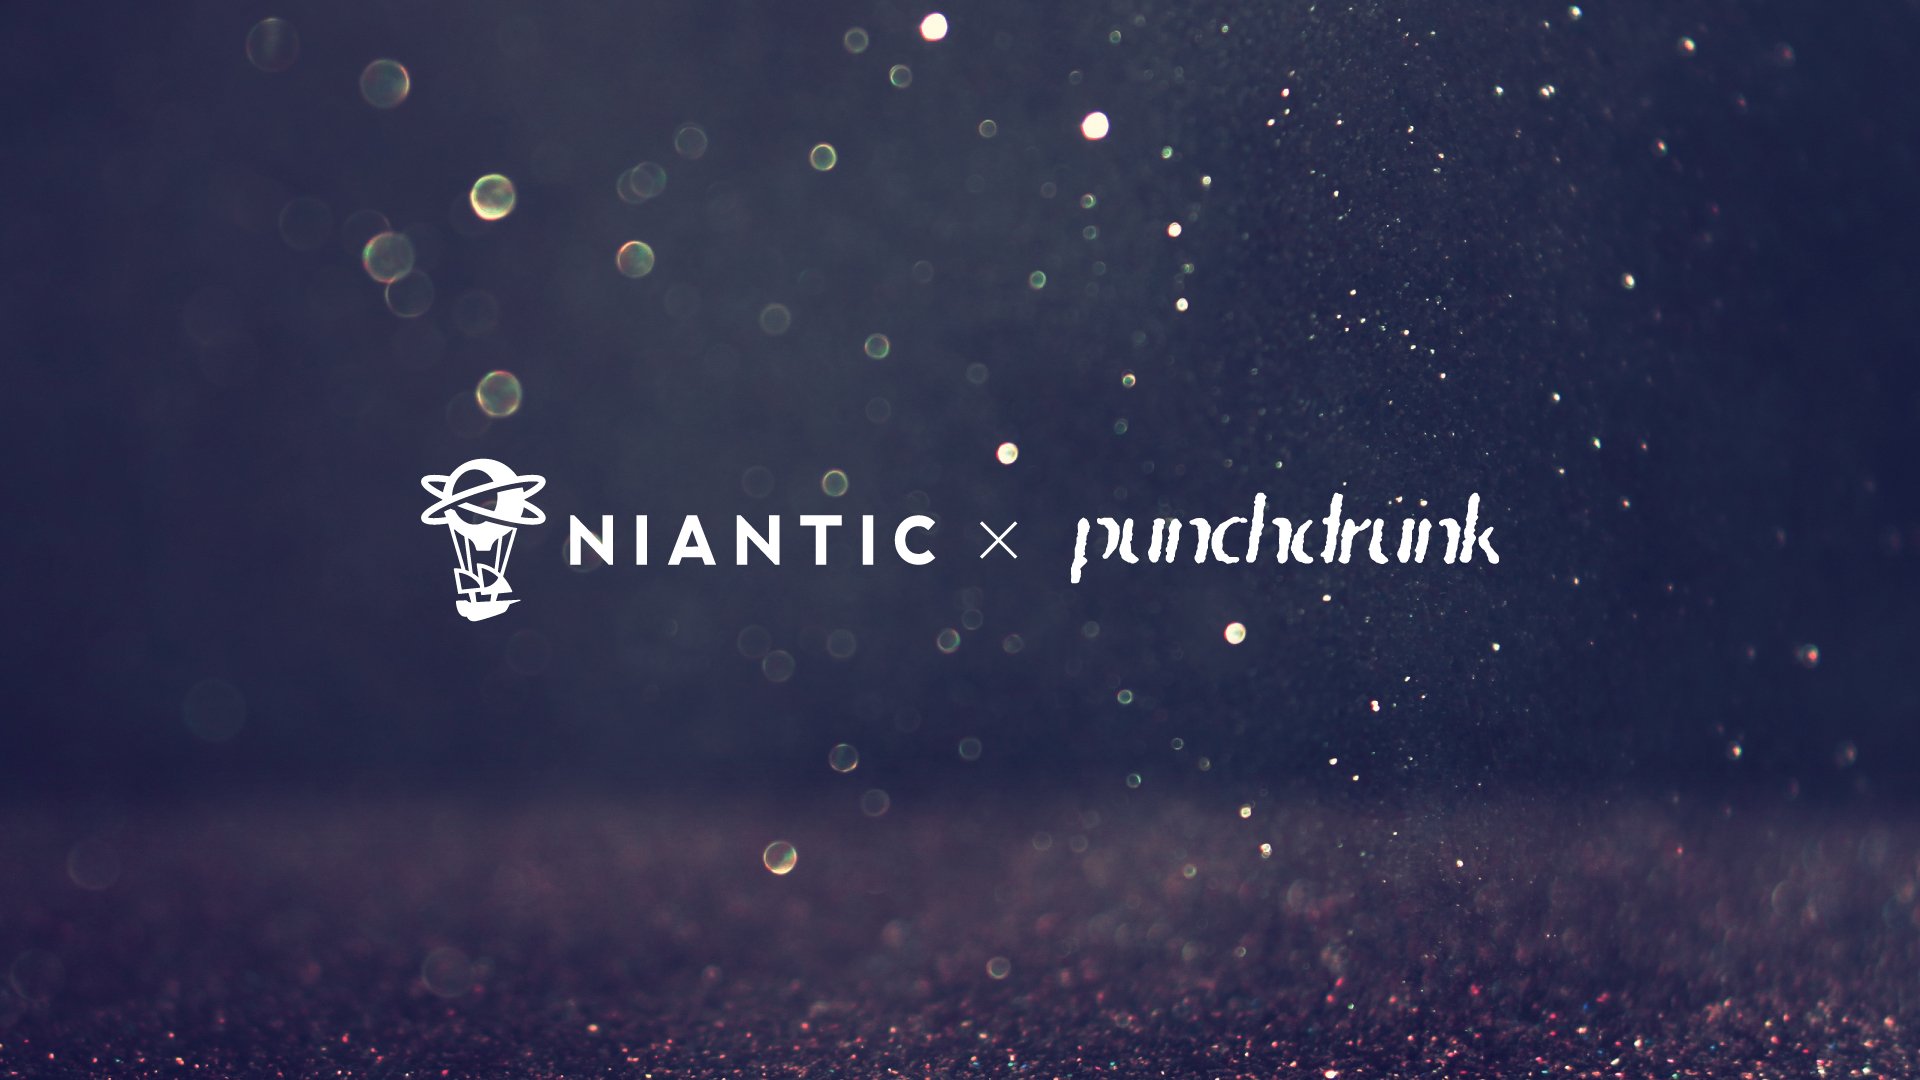 Niantic Punchdrunk Partnership